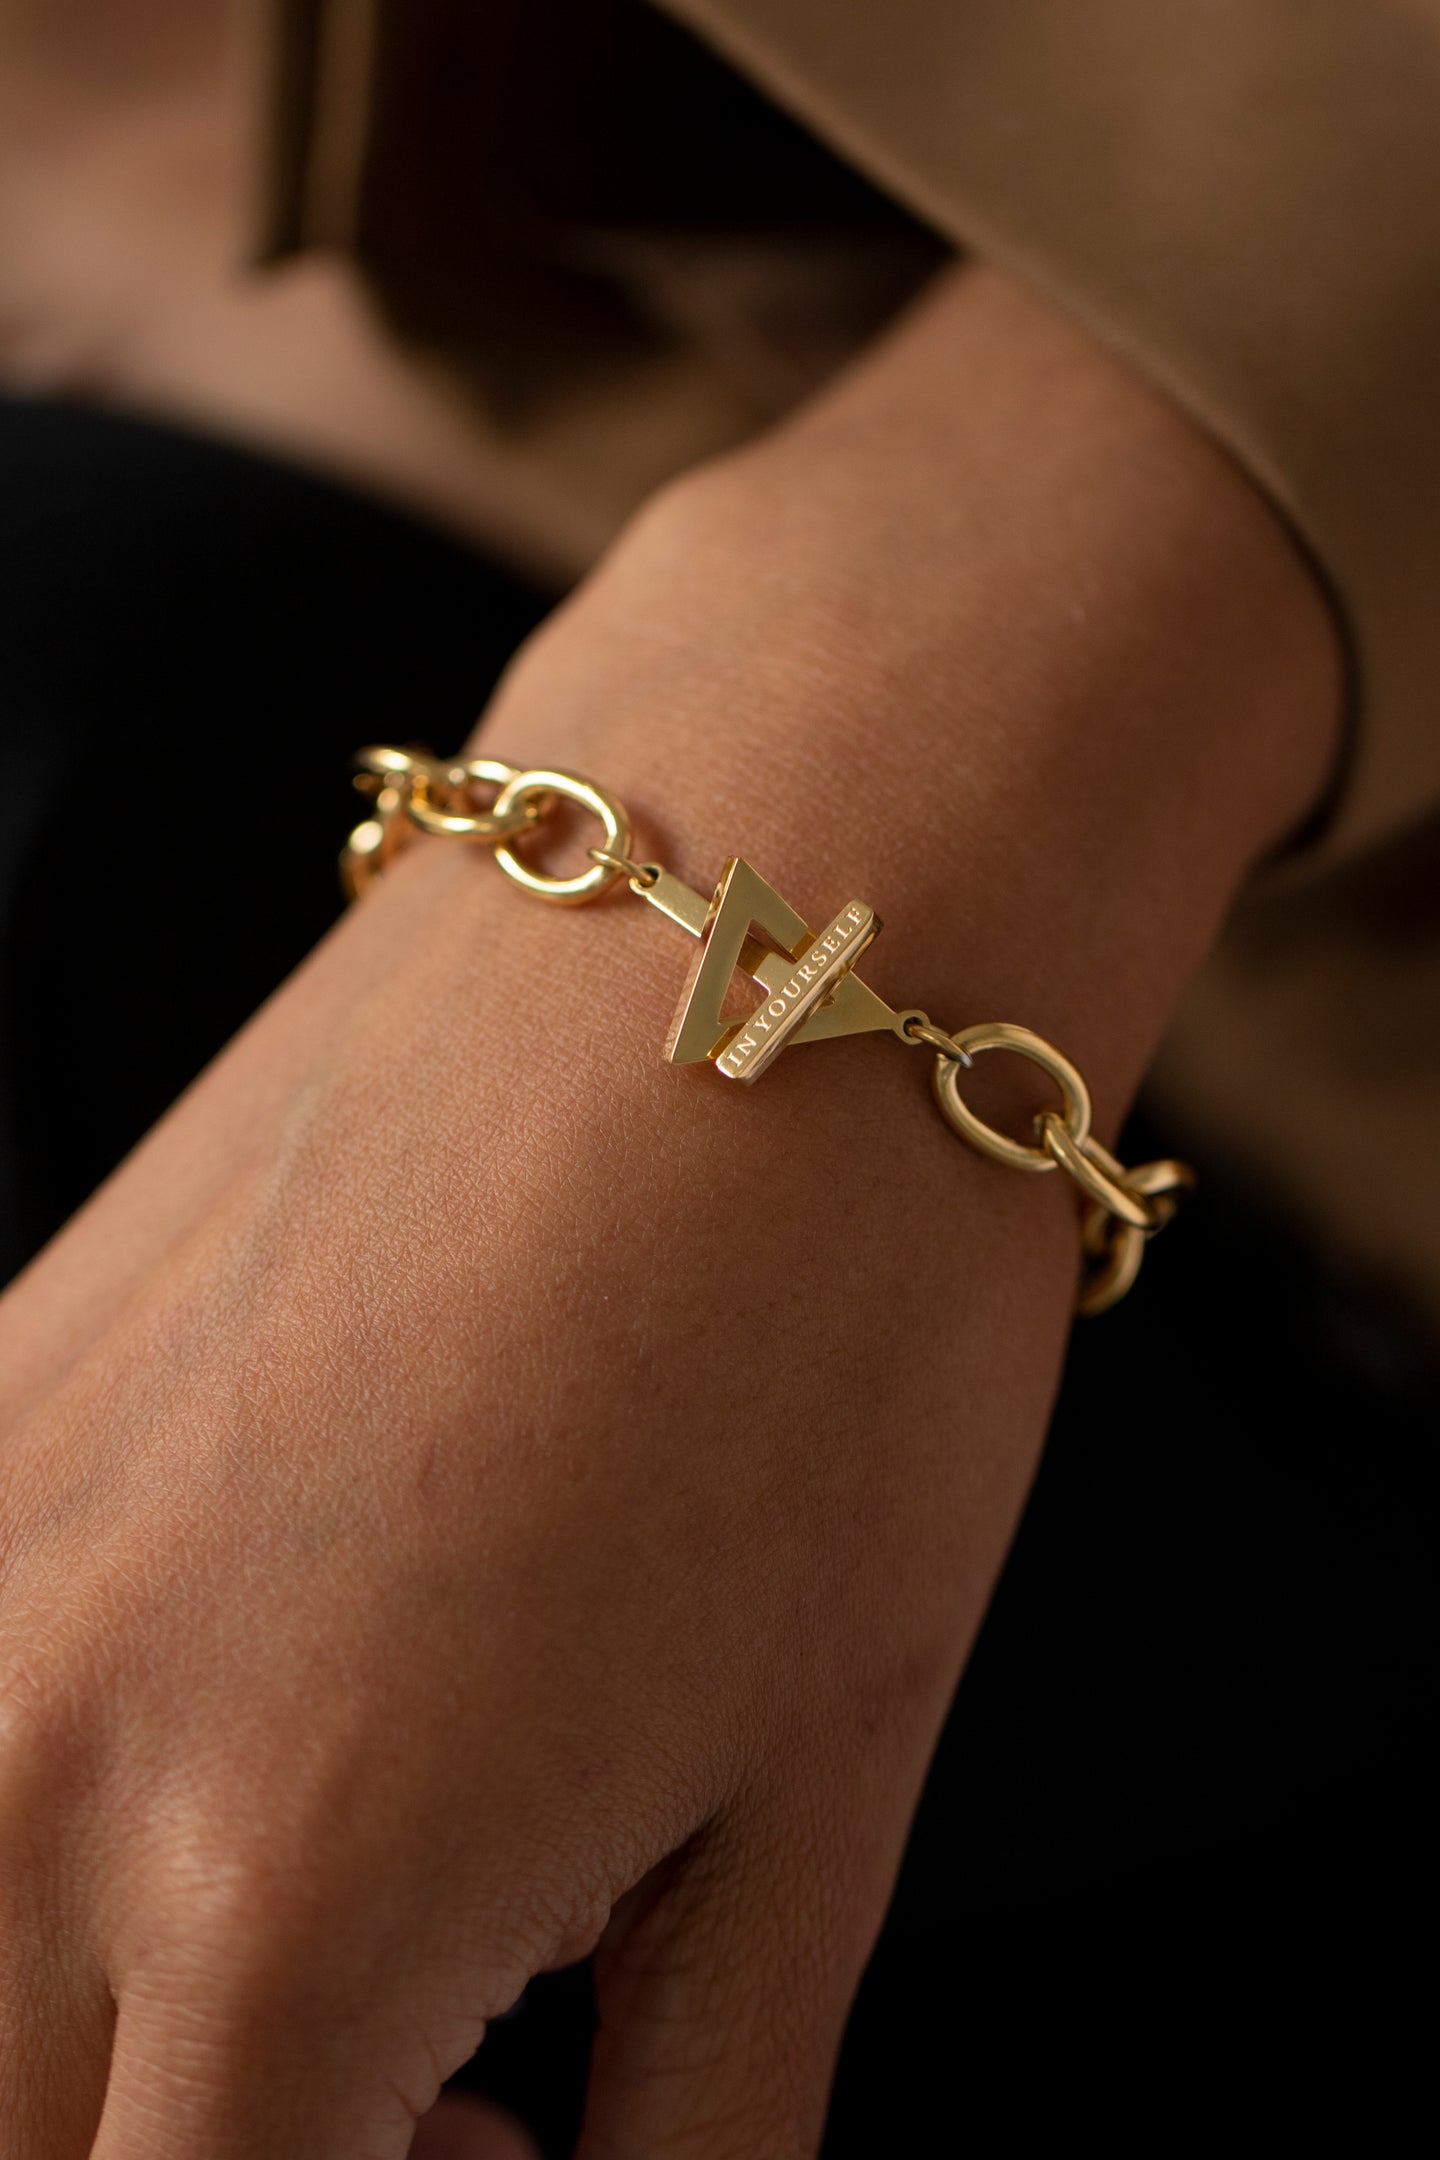 Gold chunky meaningful bracelet on woman's wrist